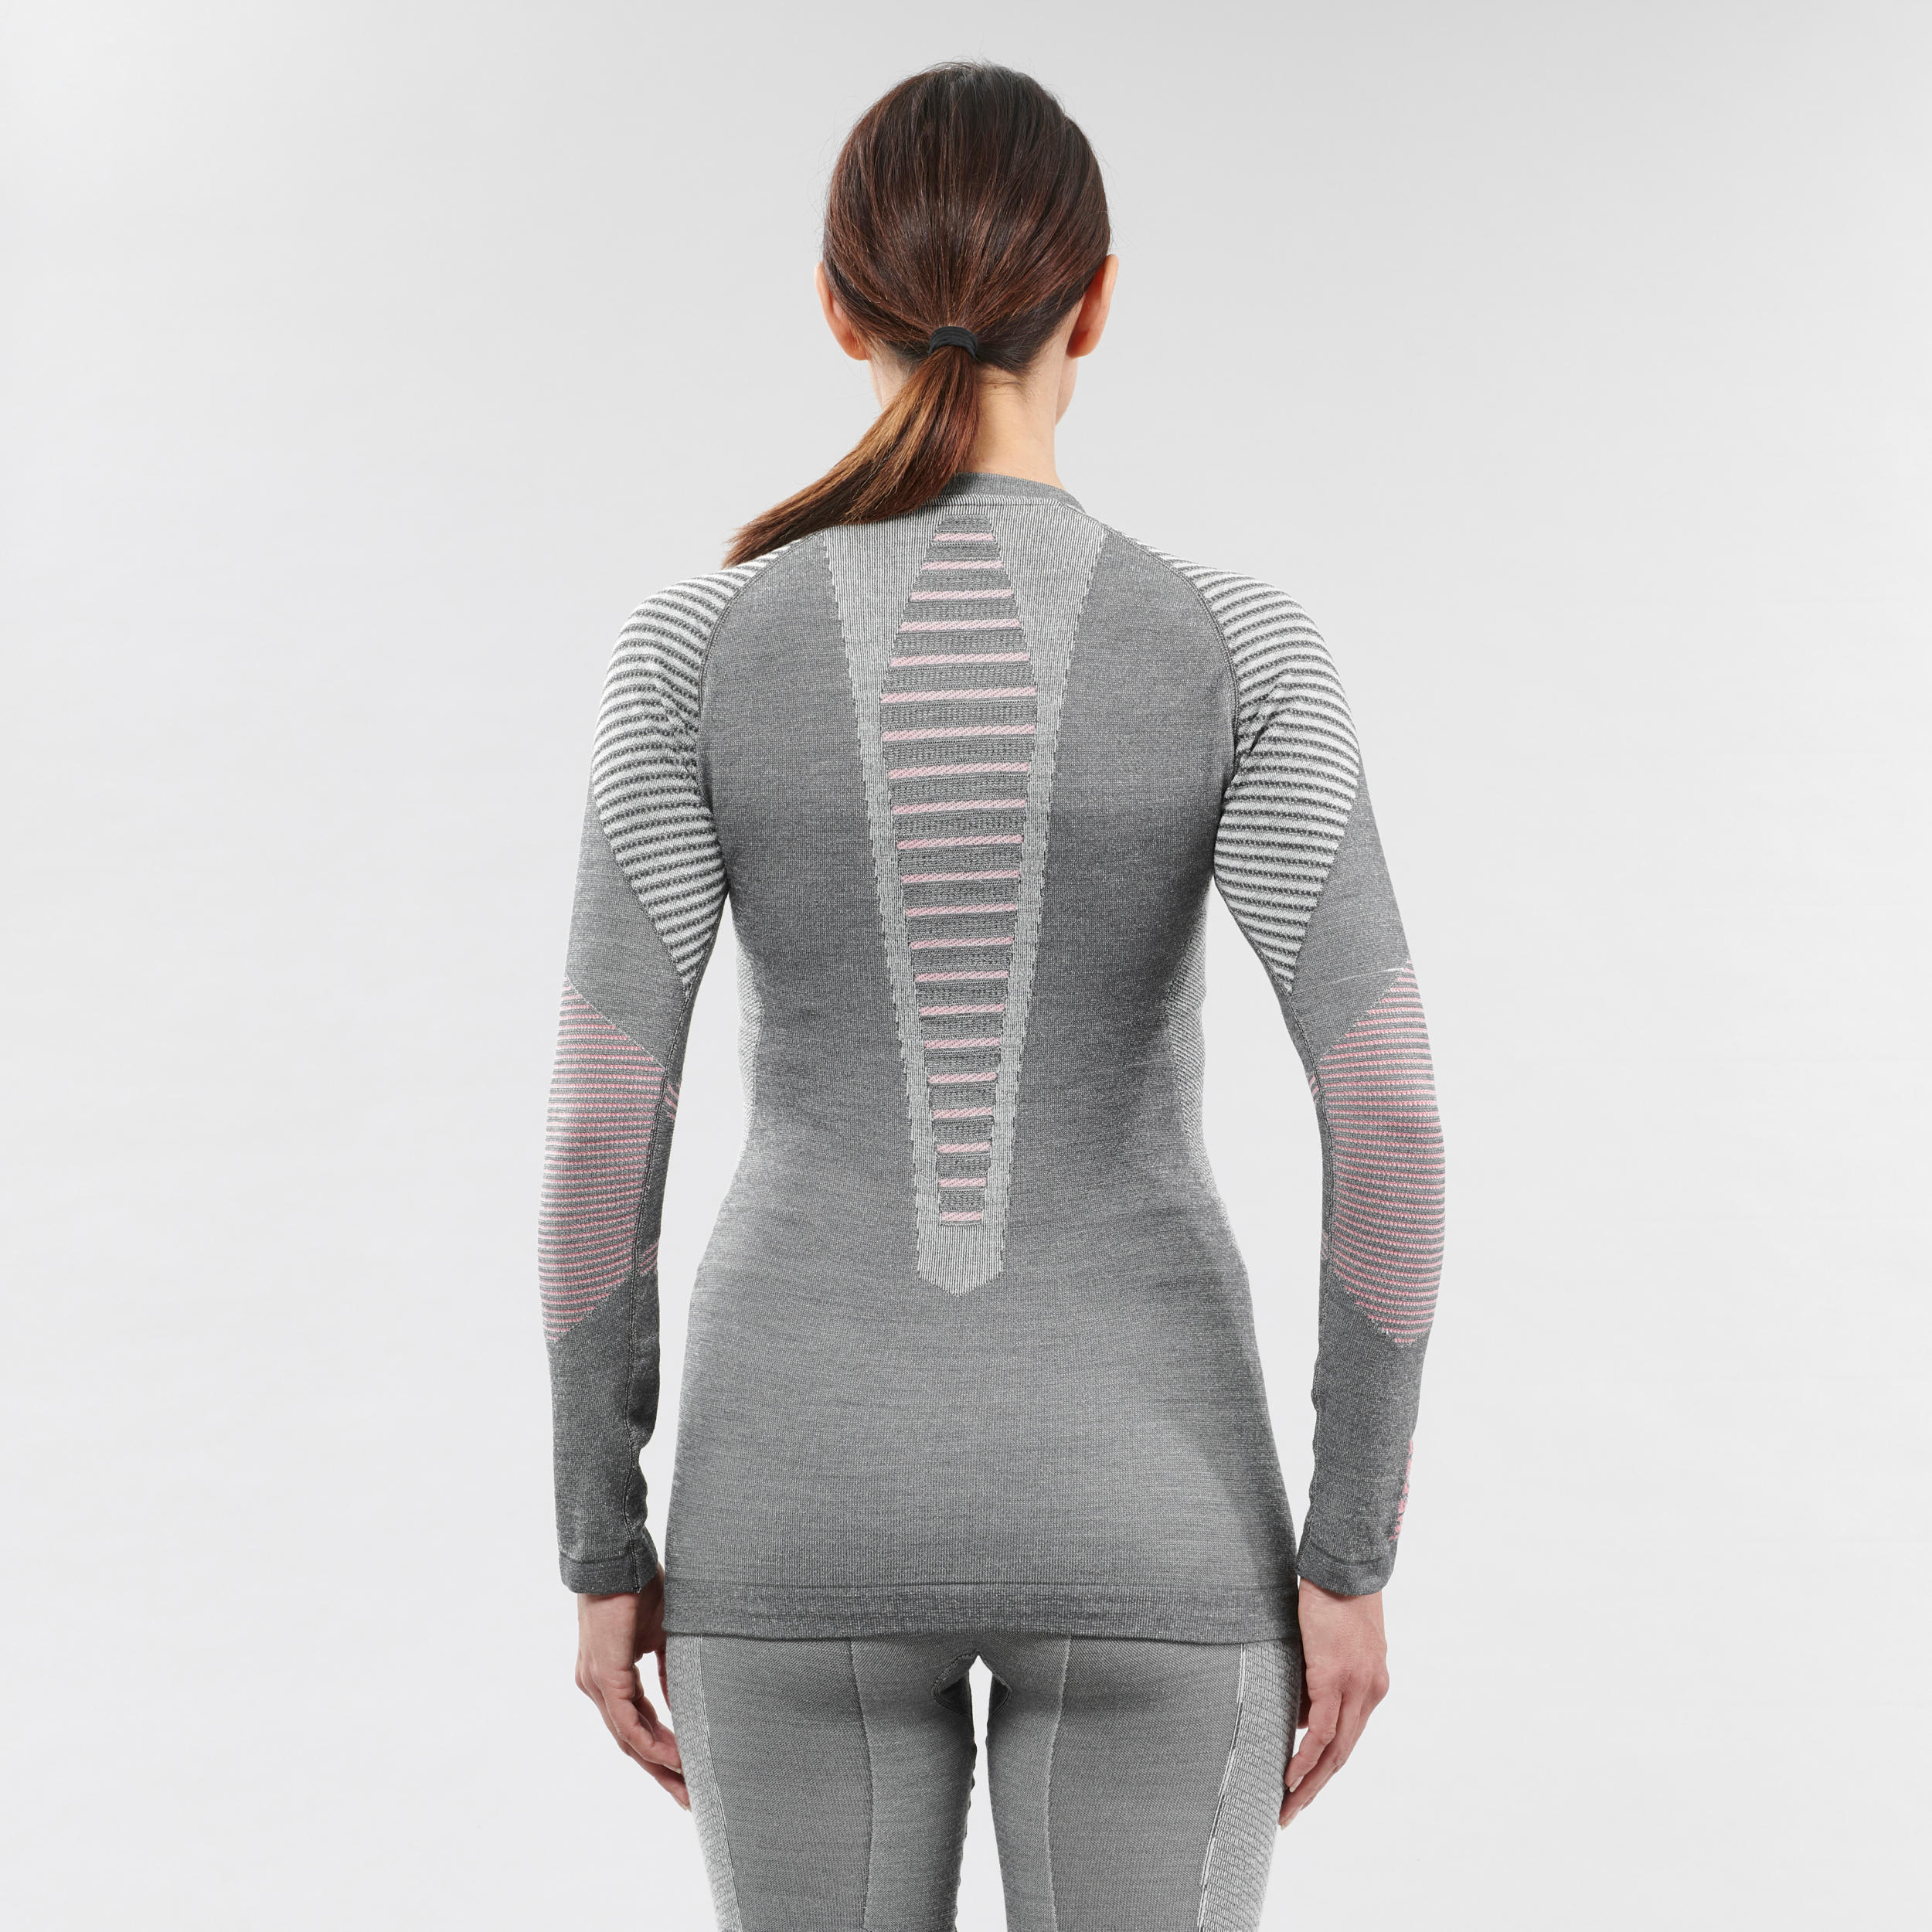 Women’s Merino Wool Base Layer Top - BL 900 Grey - WEDZE